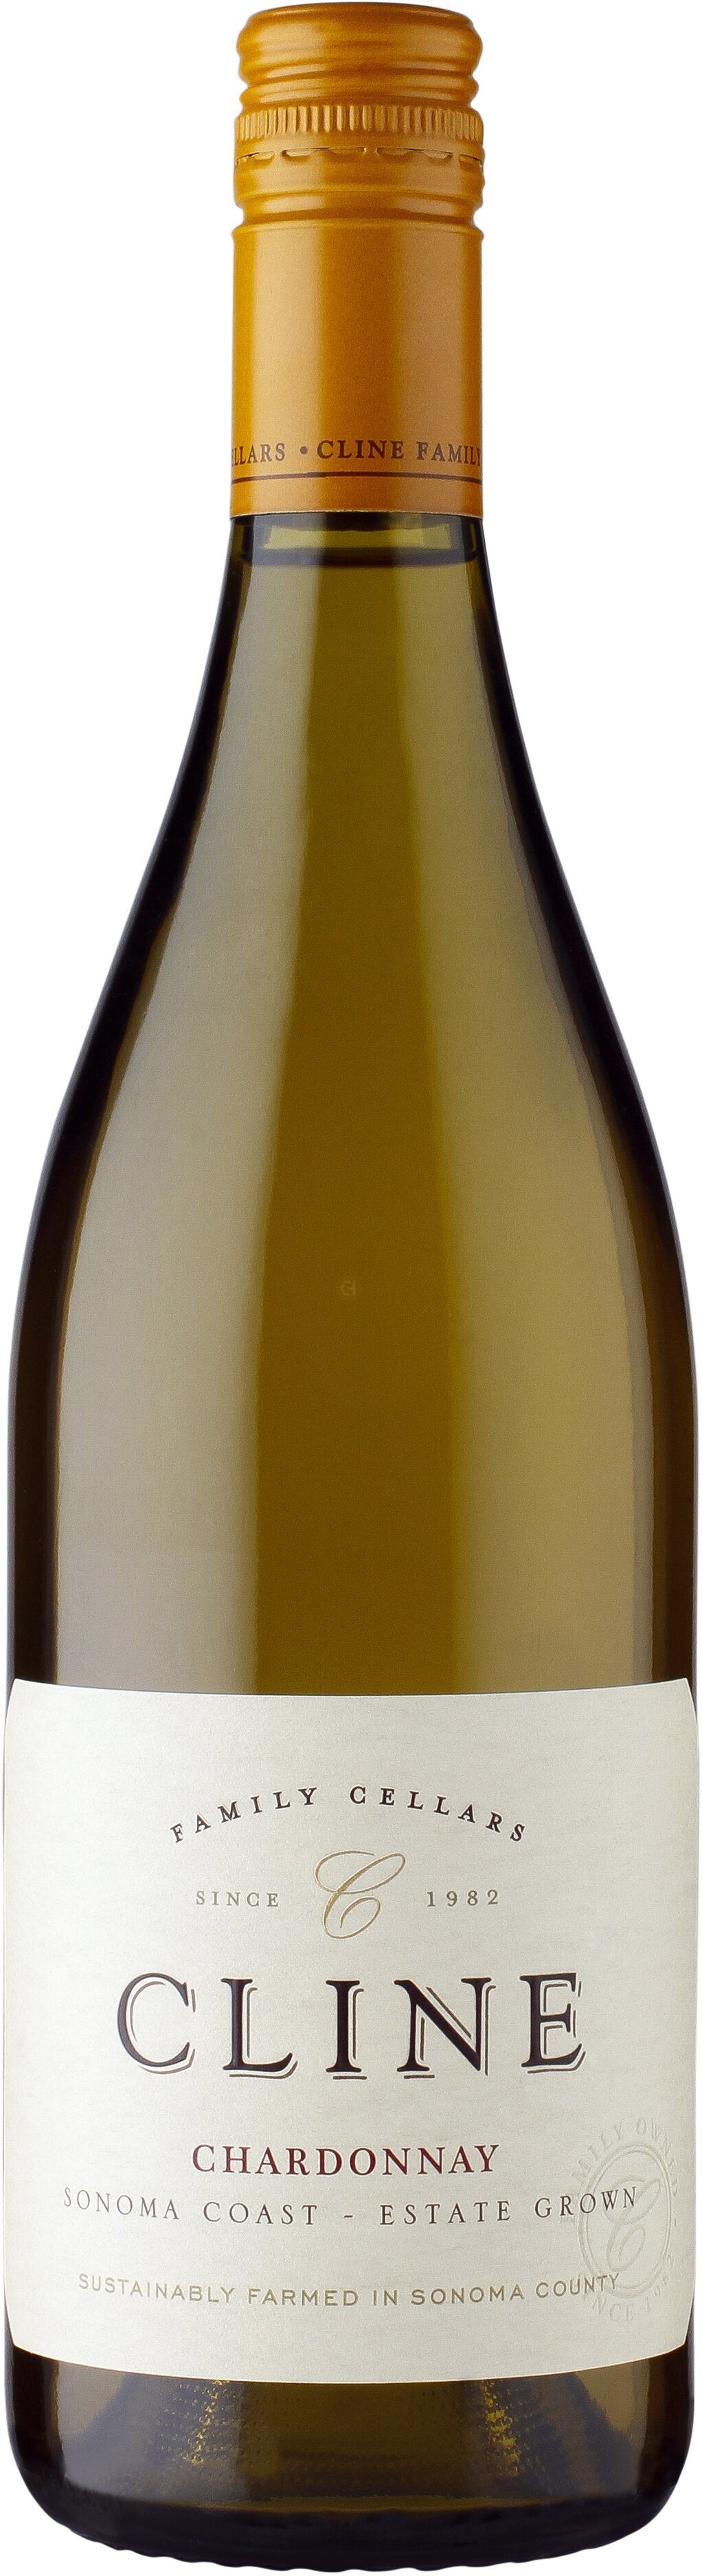 Cline Cellars Chardonnay